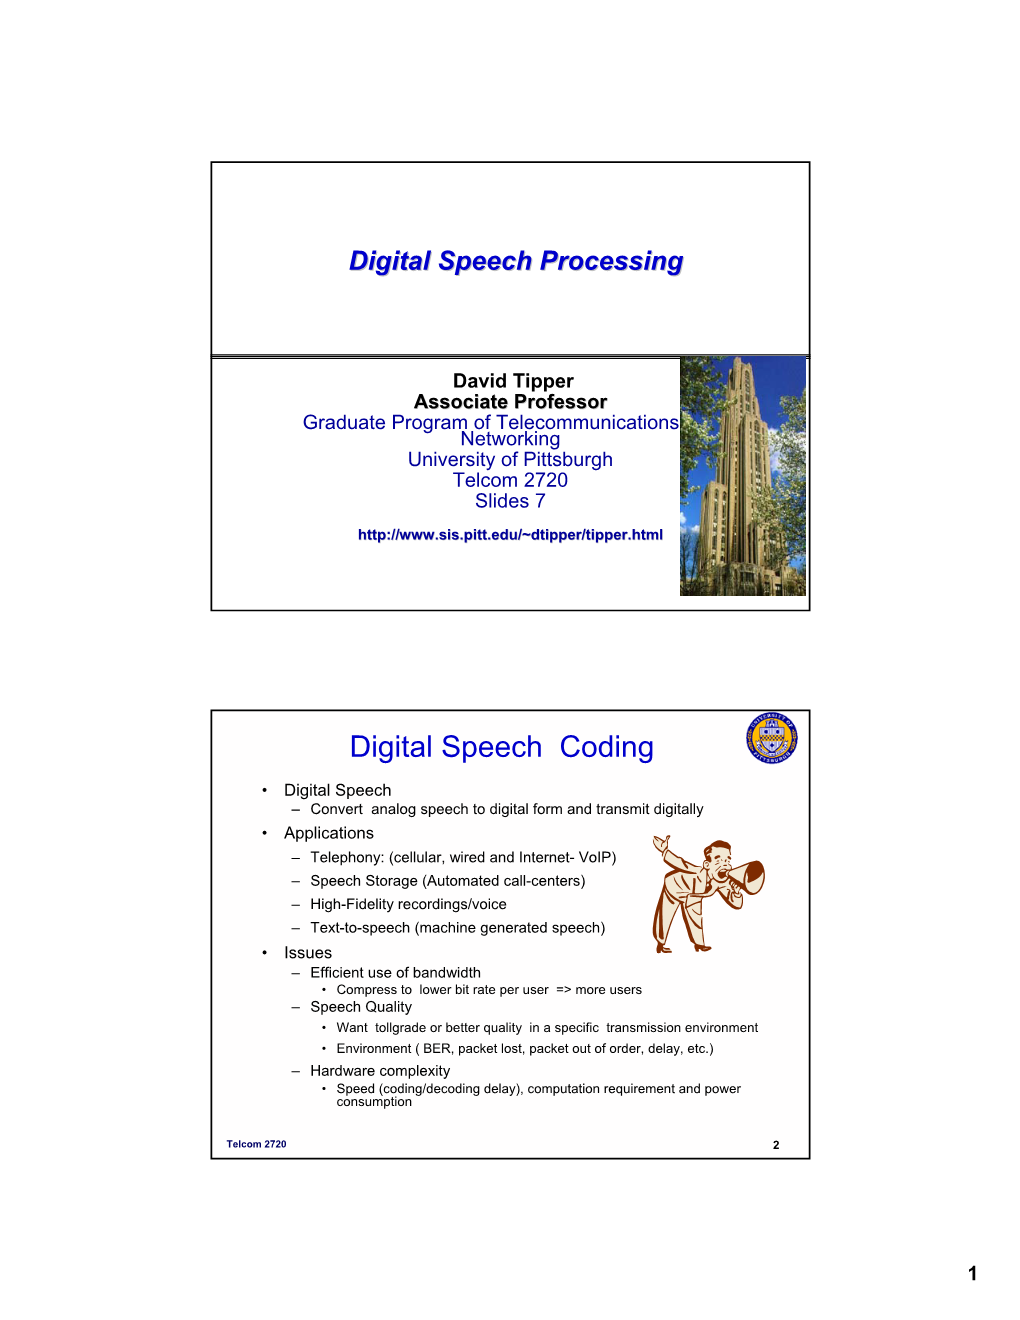 Digital Speech Coding